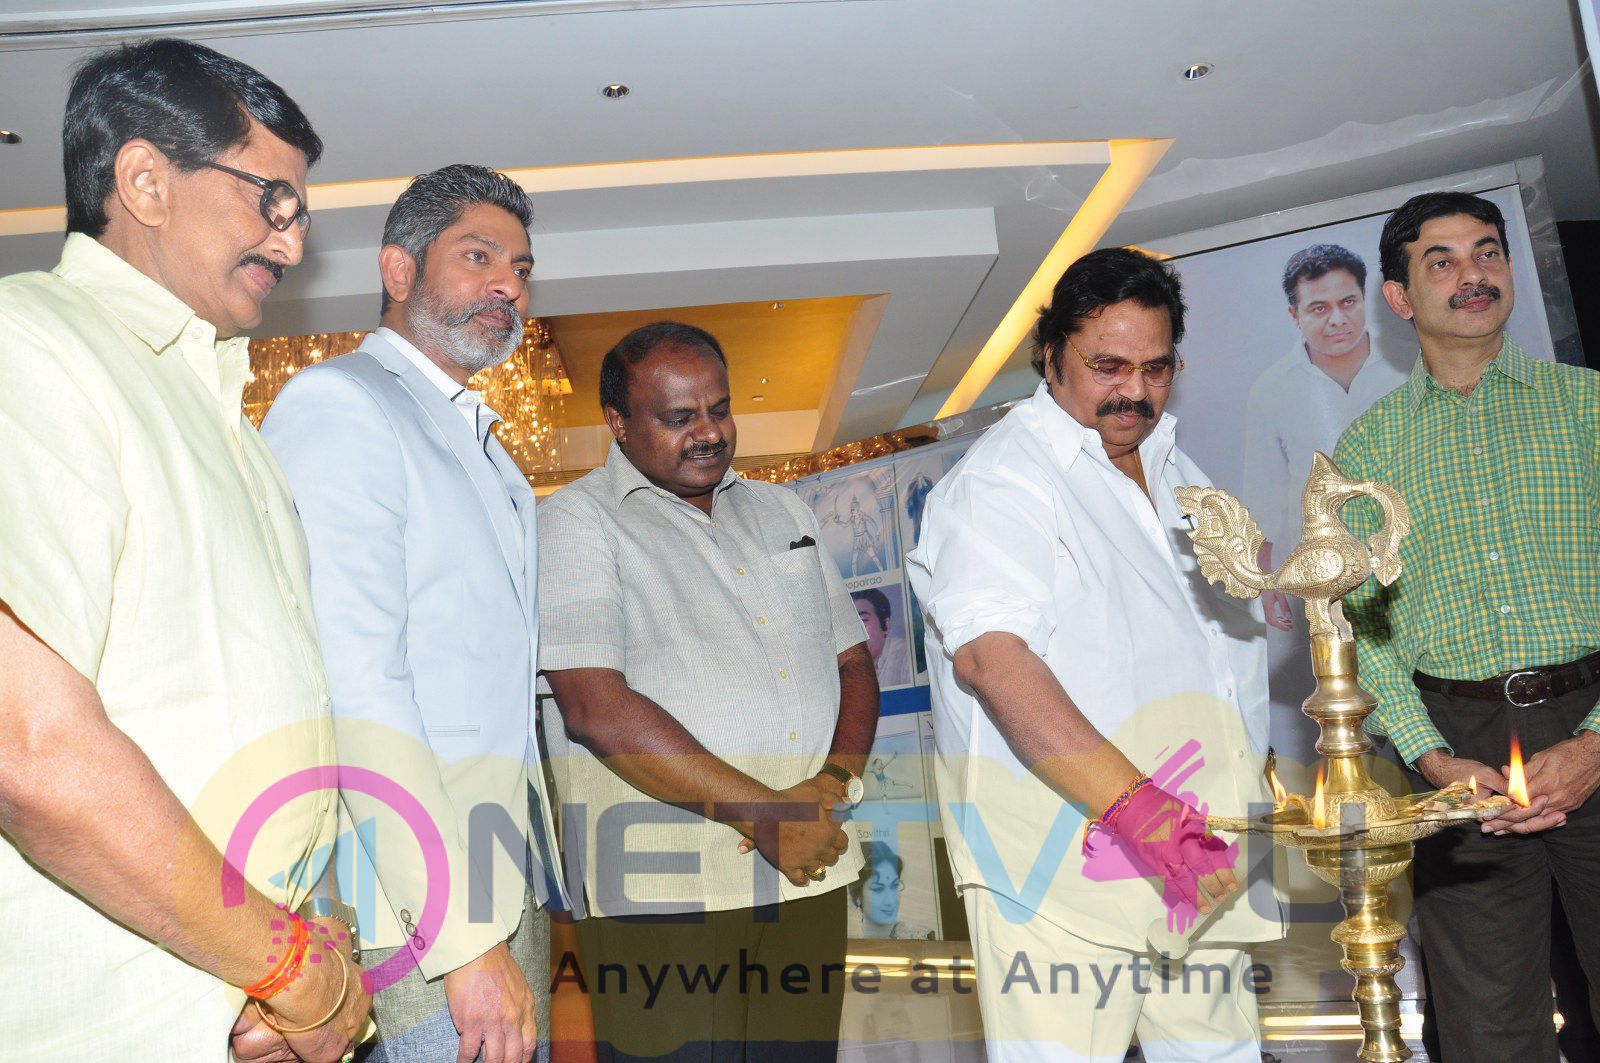 Jagapathi Babu Click Cine Cart Launch Photos Telugu Gallery